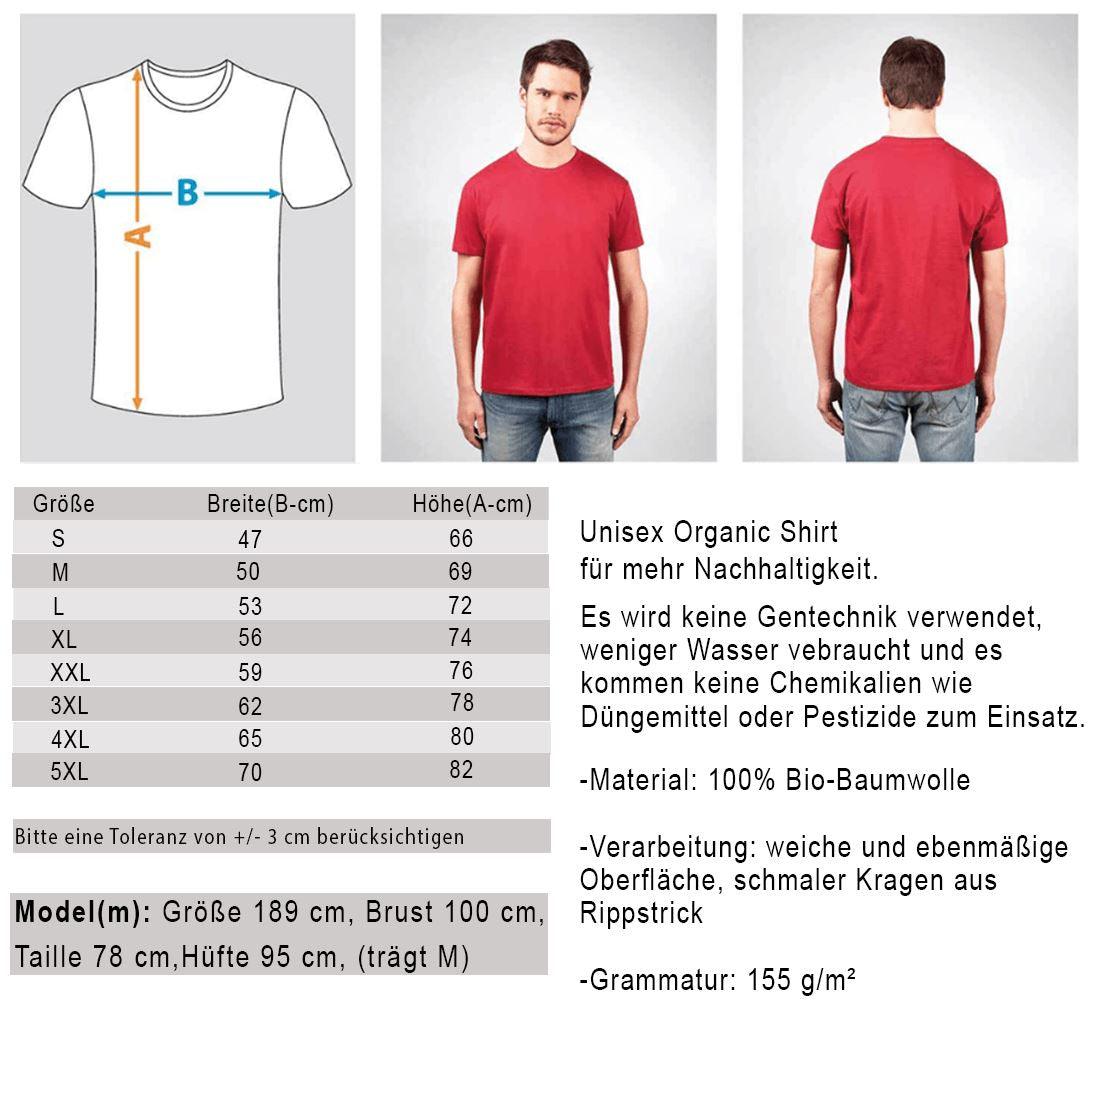 Heile Seele e.V. - Unisex Organic Shirt Shirtee 